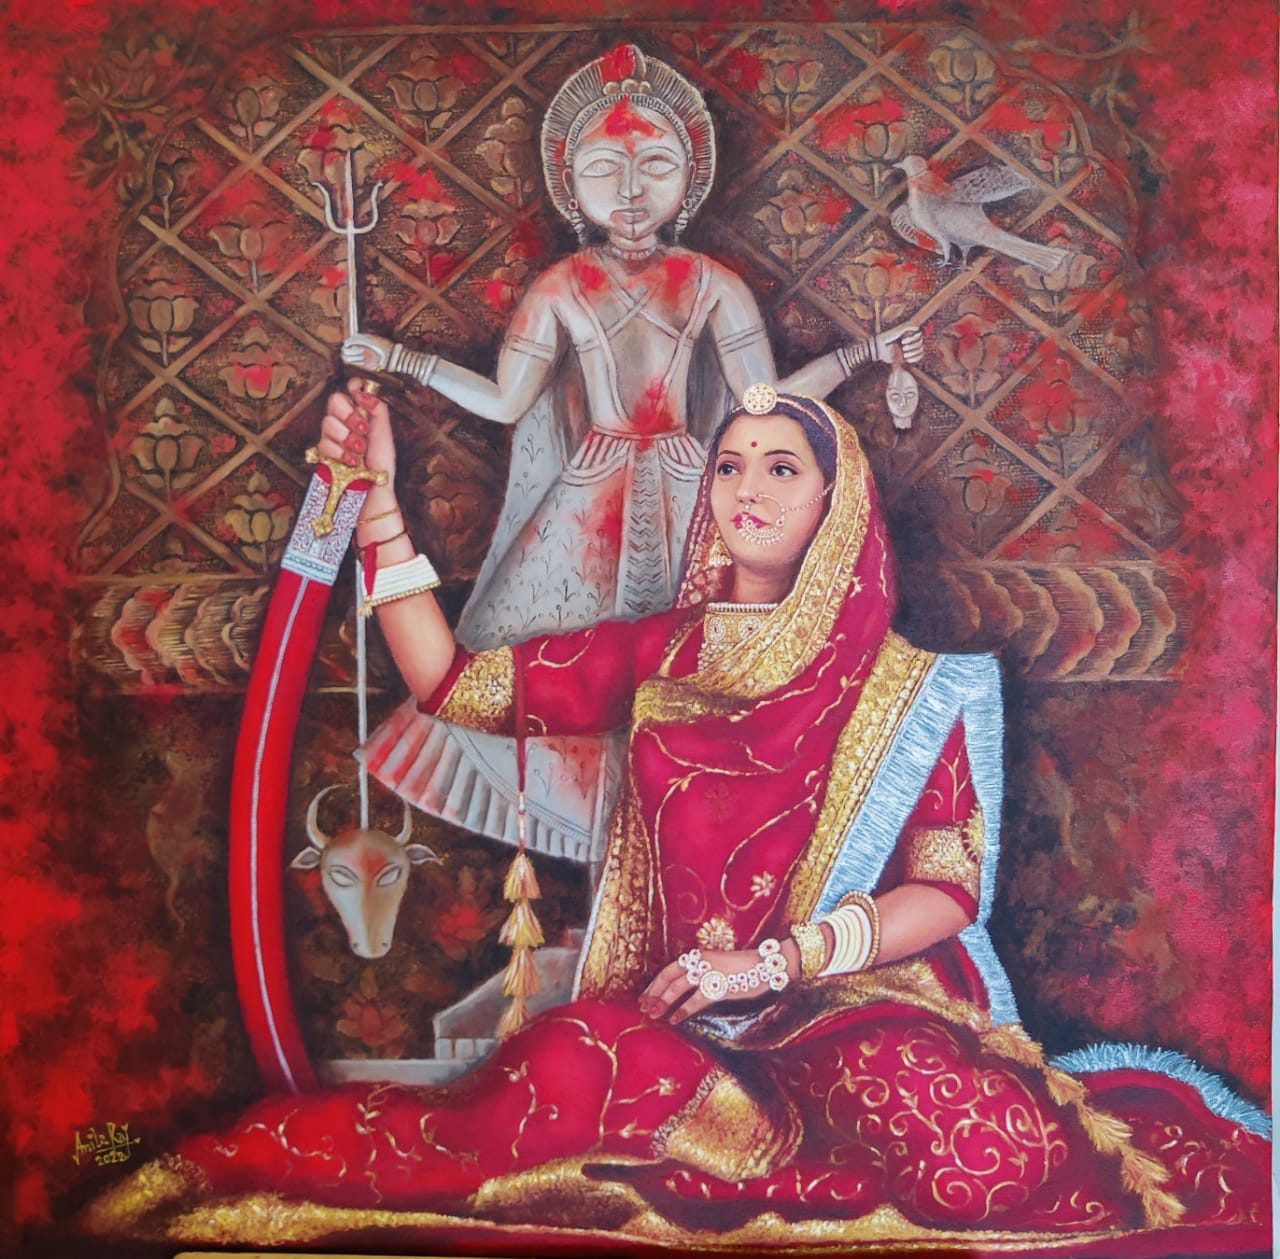 Realism Painting with Oil on Canvas "Shakti" art by Anita Raj